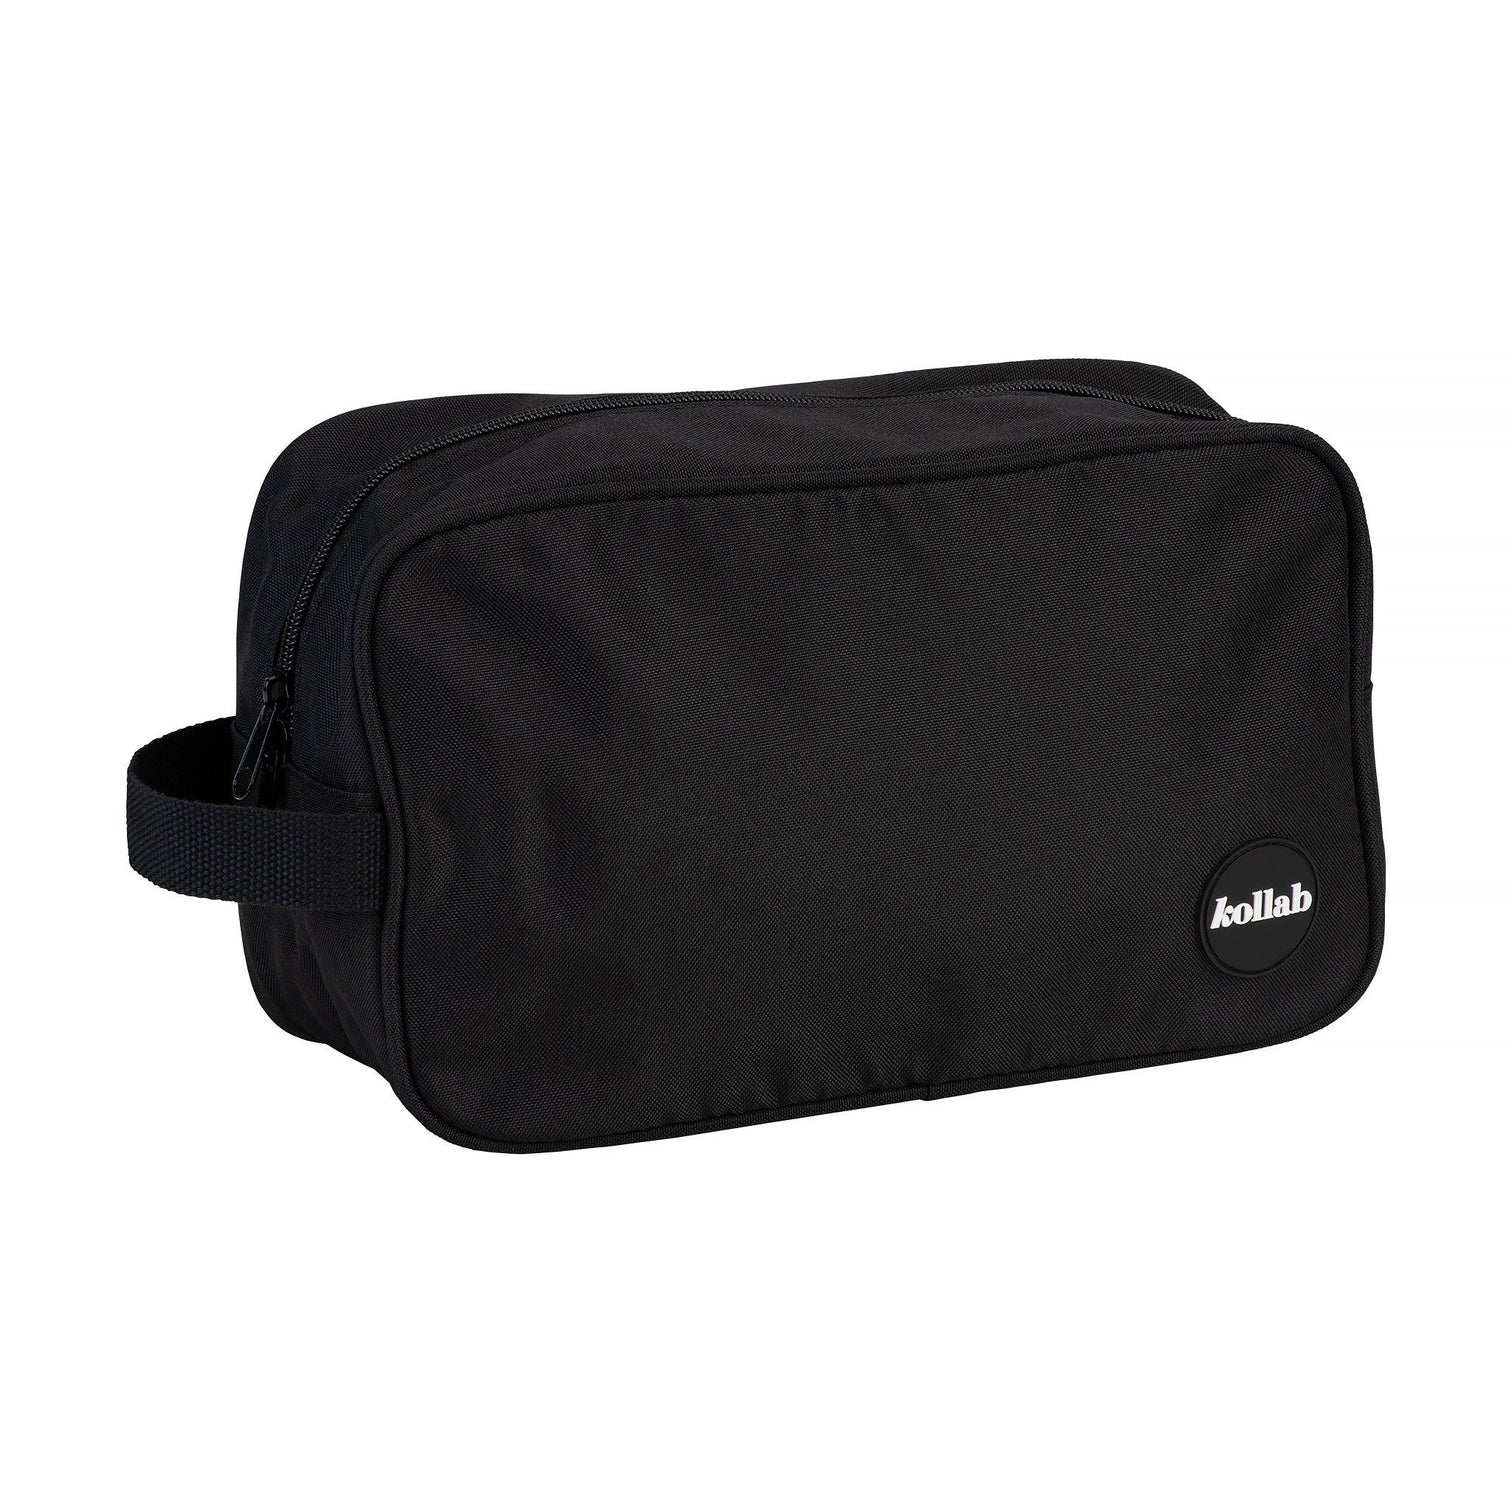 Kollab Holiday Travel Bag Black Black – Handbags from BJs Furniture Horsham